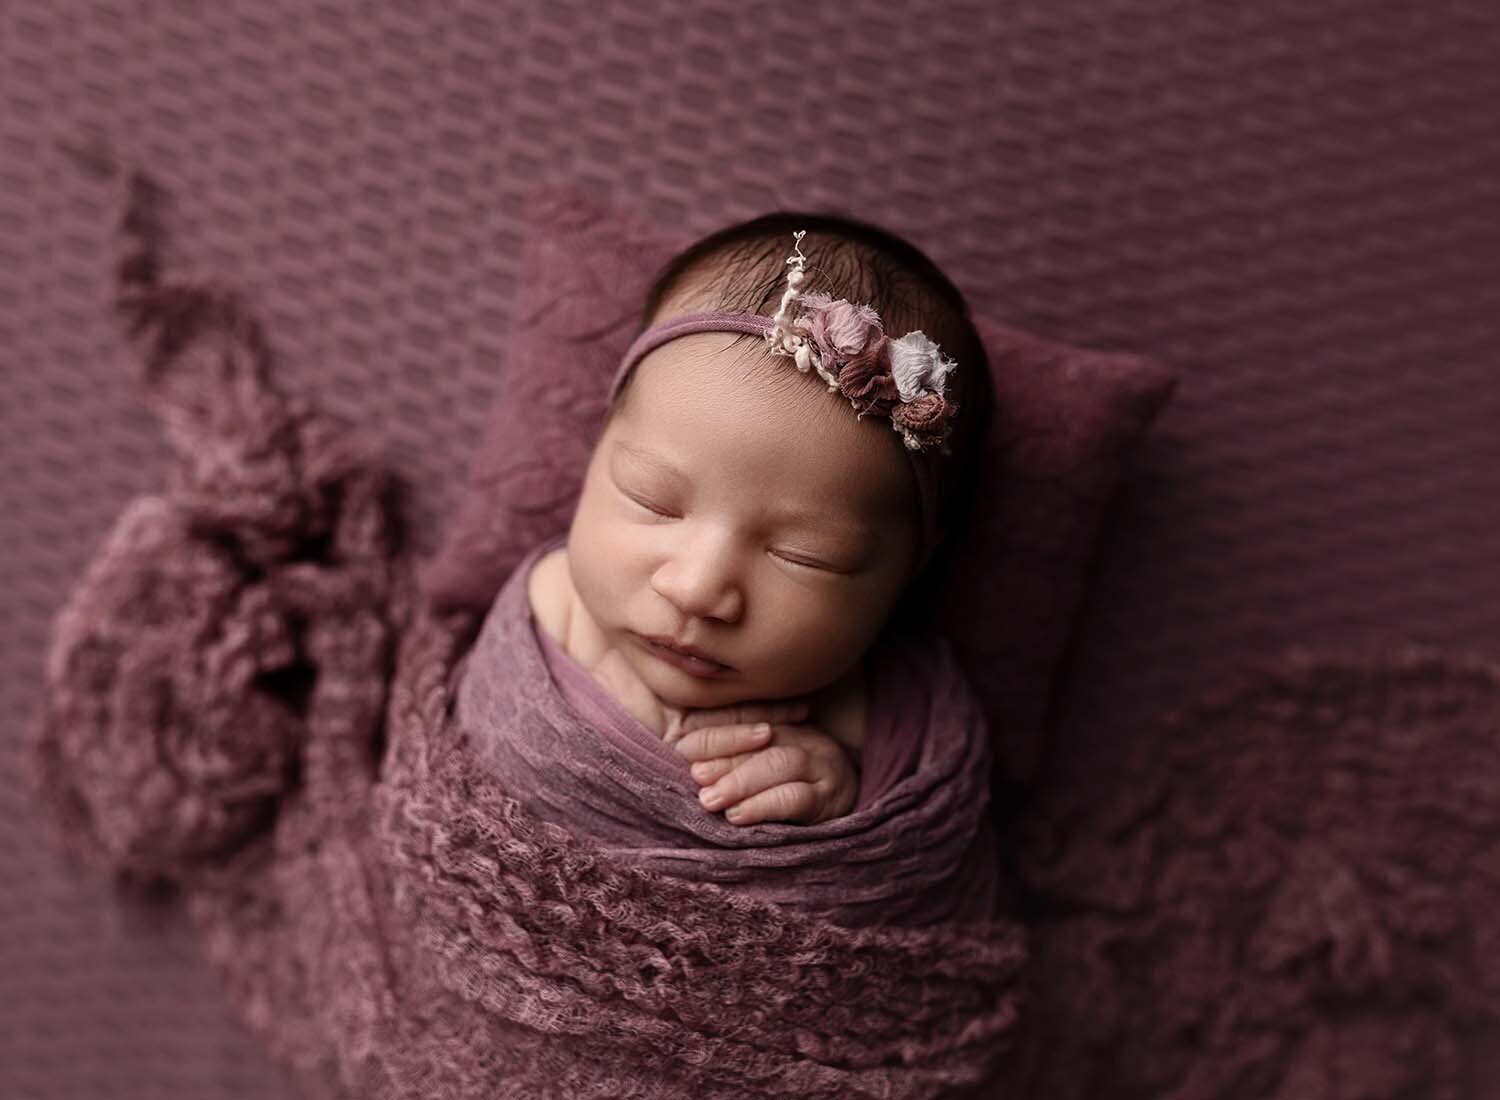 Arlington VA newborn portraits, newborn photographer in Arlington VA, professional newborn photos, newborn photography packages